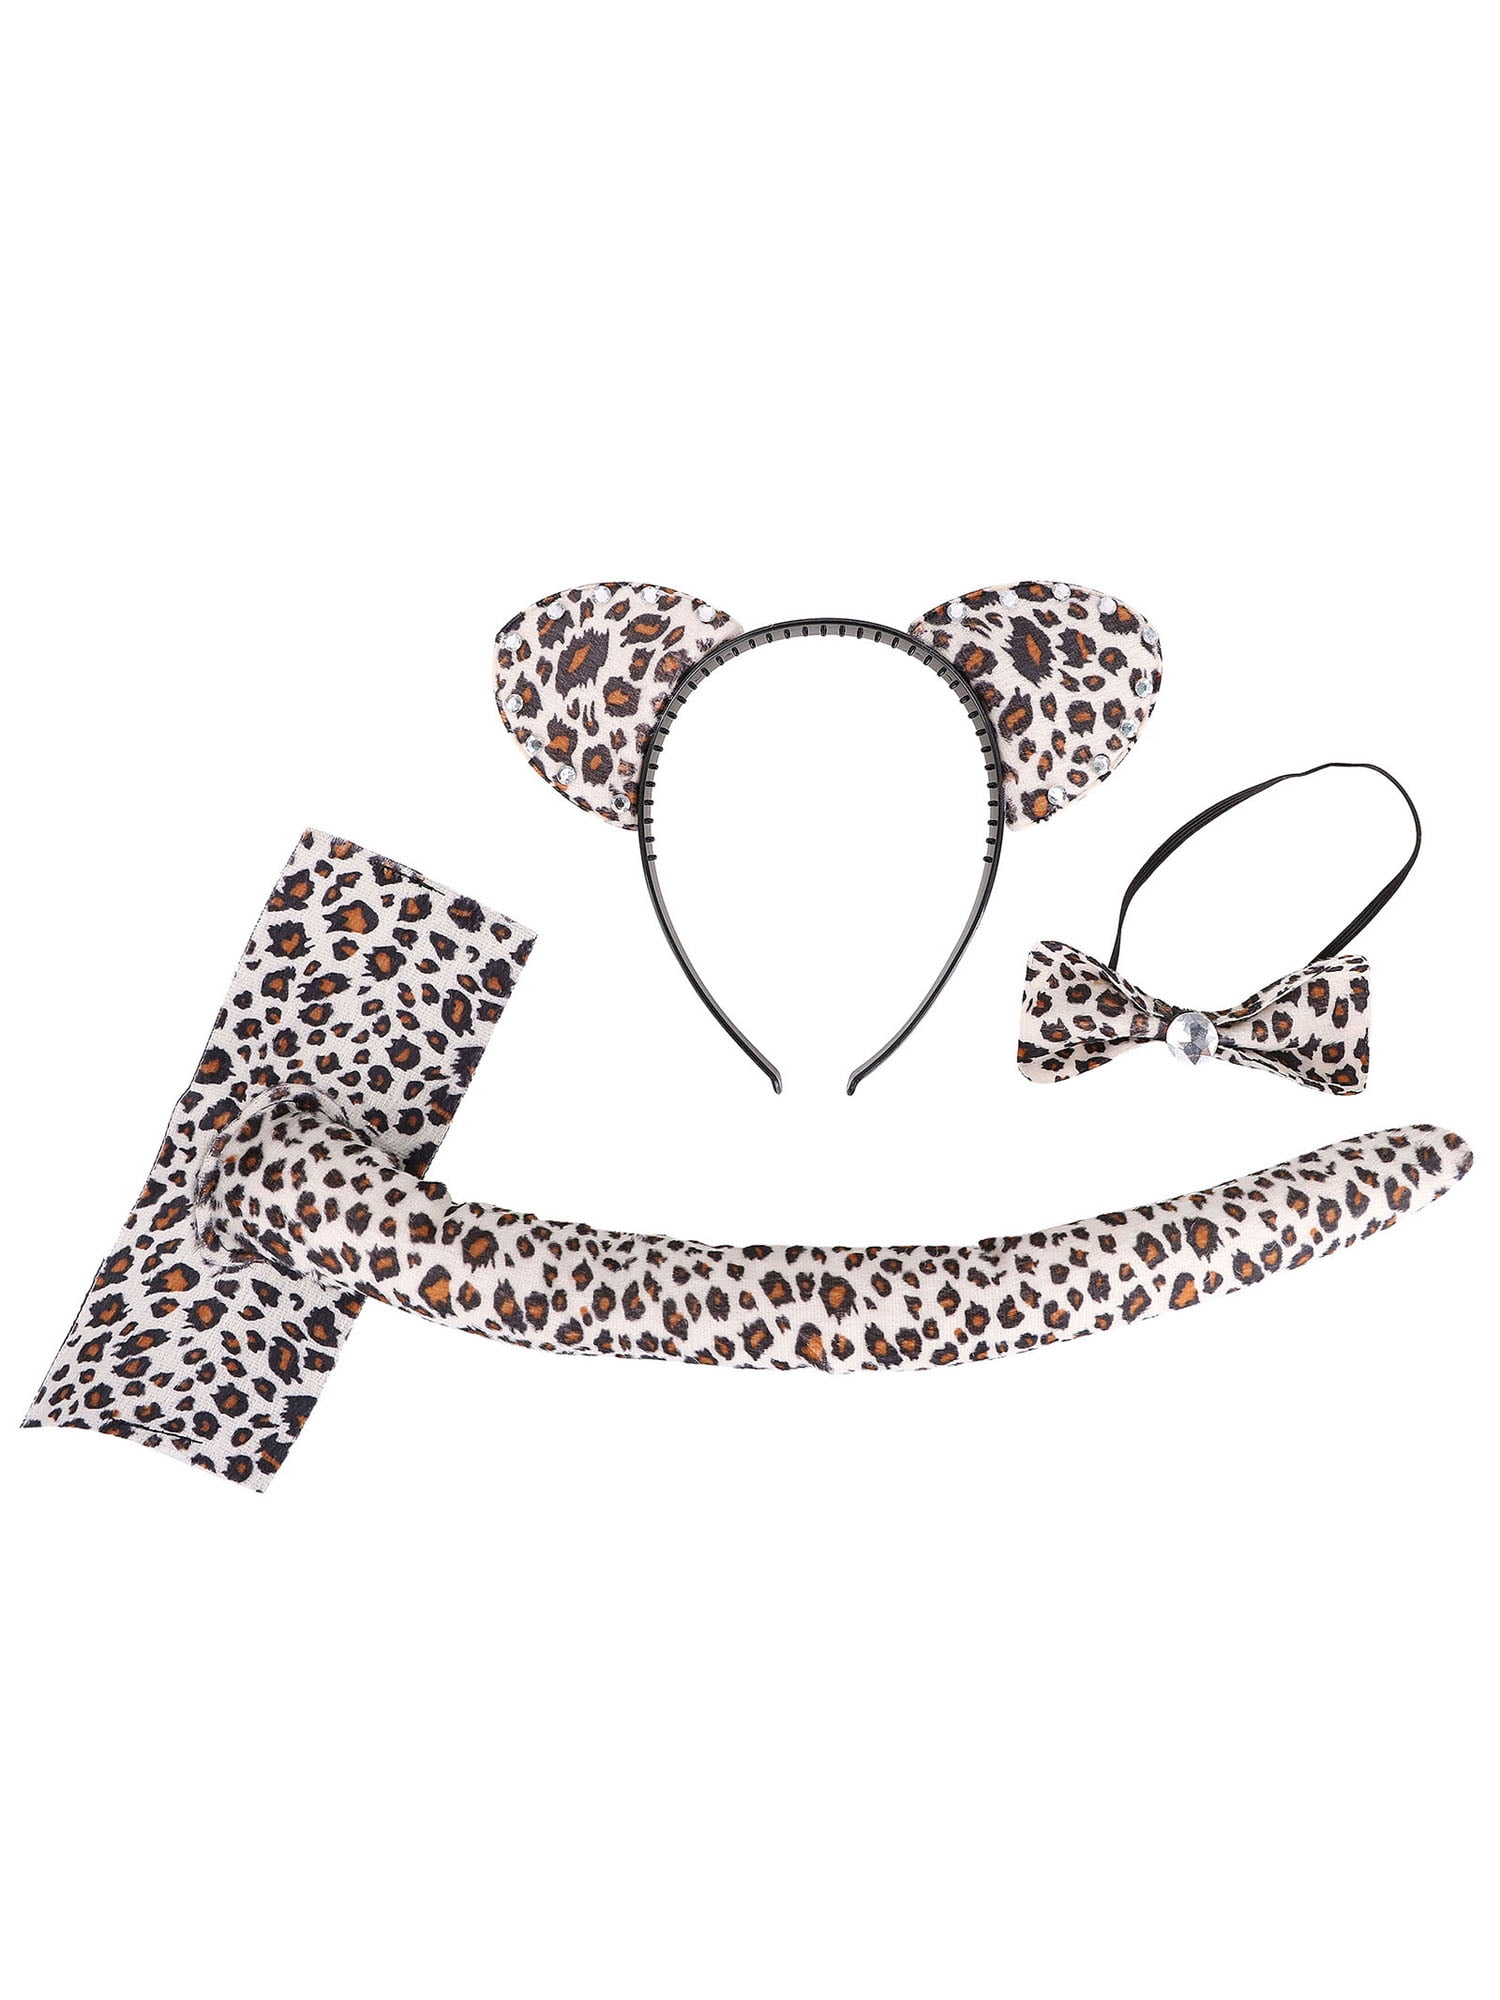 Tail NWT Bow Tie OSFM Brown Leopard 3 pc Halloween Costume Set Girls Ears 